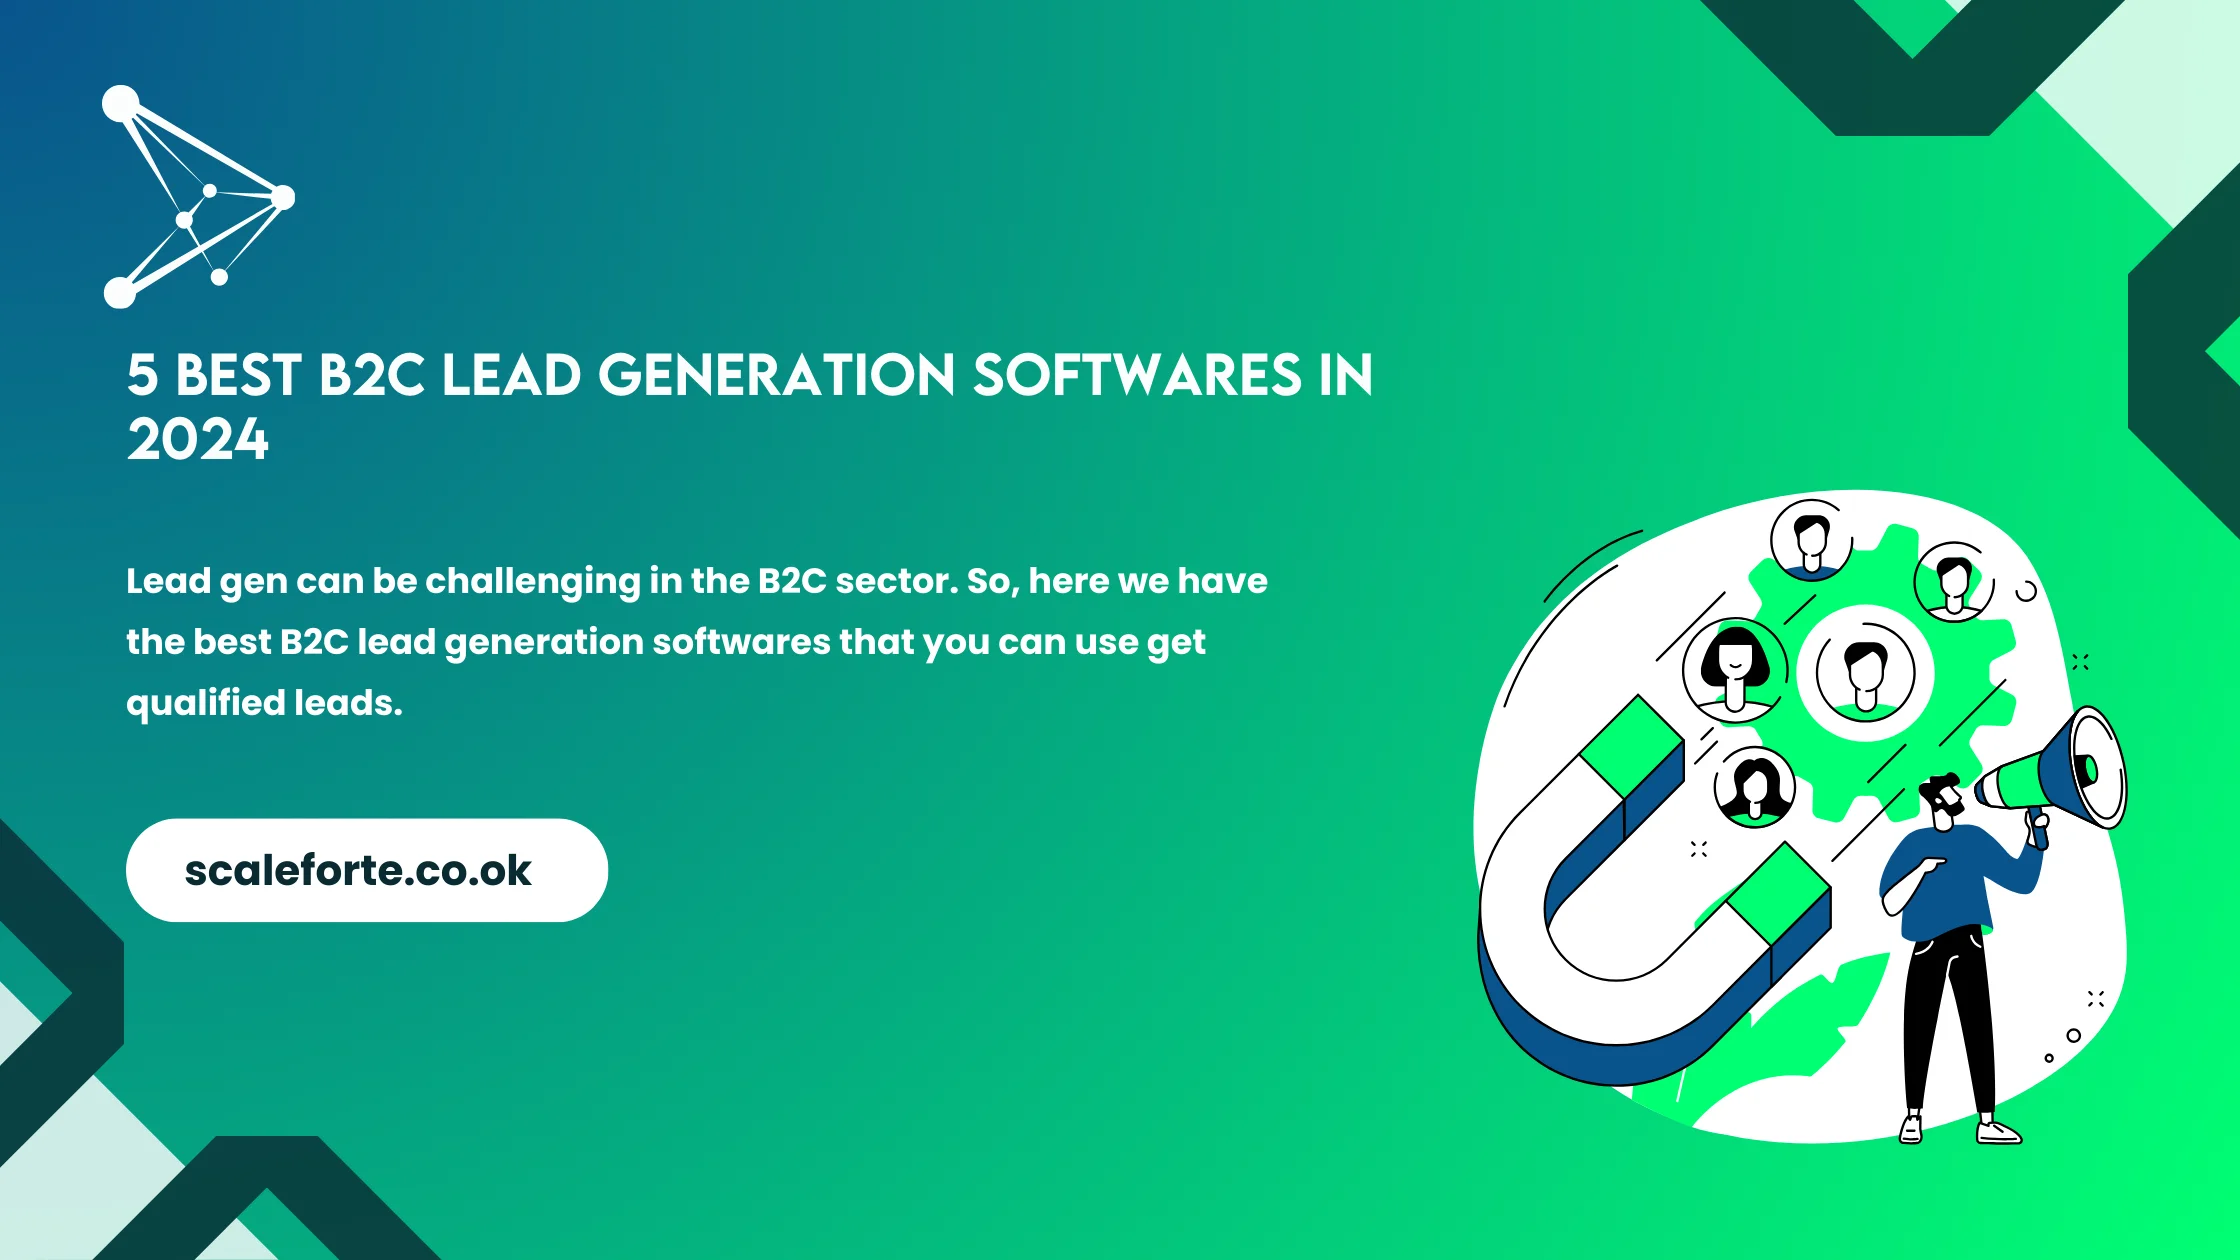 5 Best B2C Lead Generation Softwares